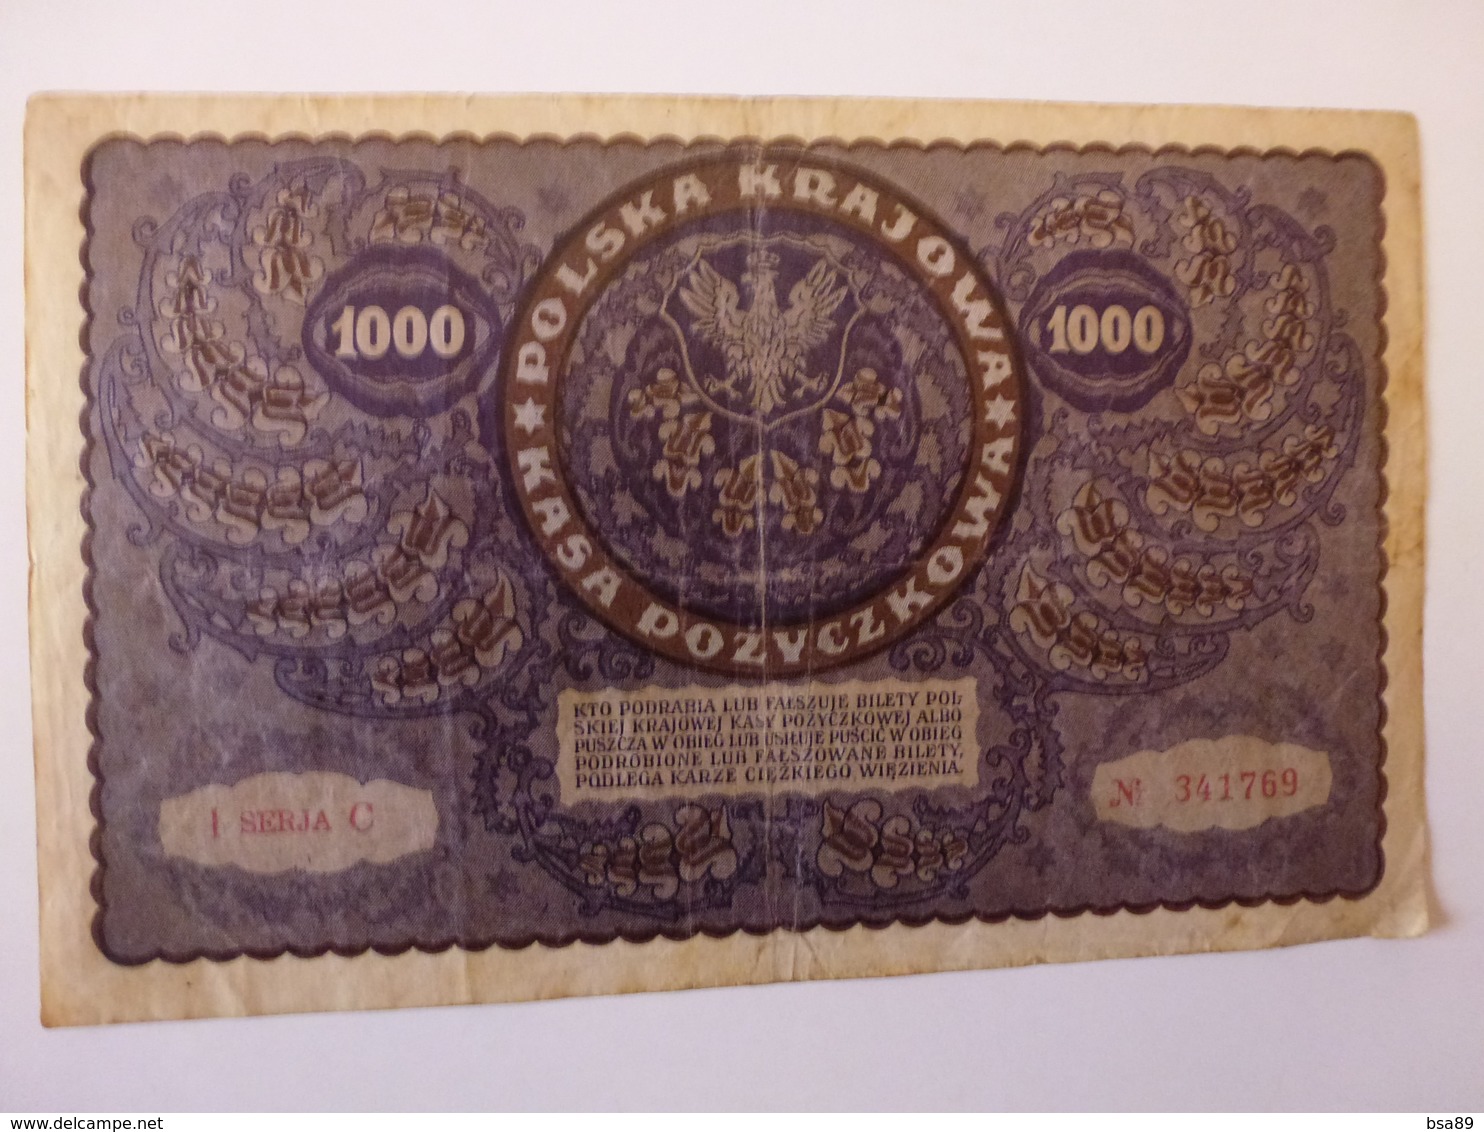 1 BILLET POLONAIS DE 1000 MAREK, N° 341769, I SERJA C, VOIR SCAN RECTO-VERSO DE 1919 - Polonia